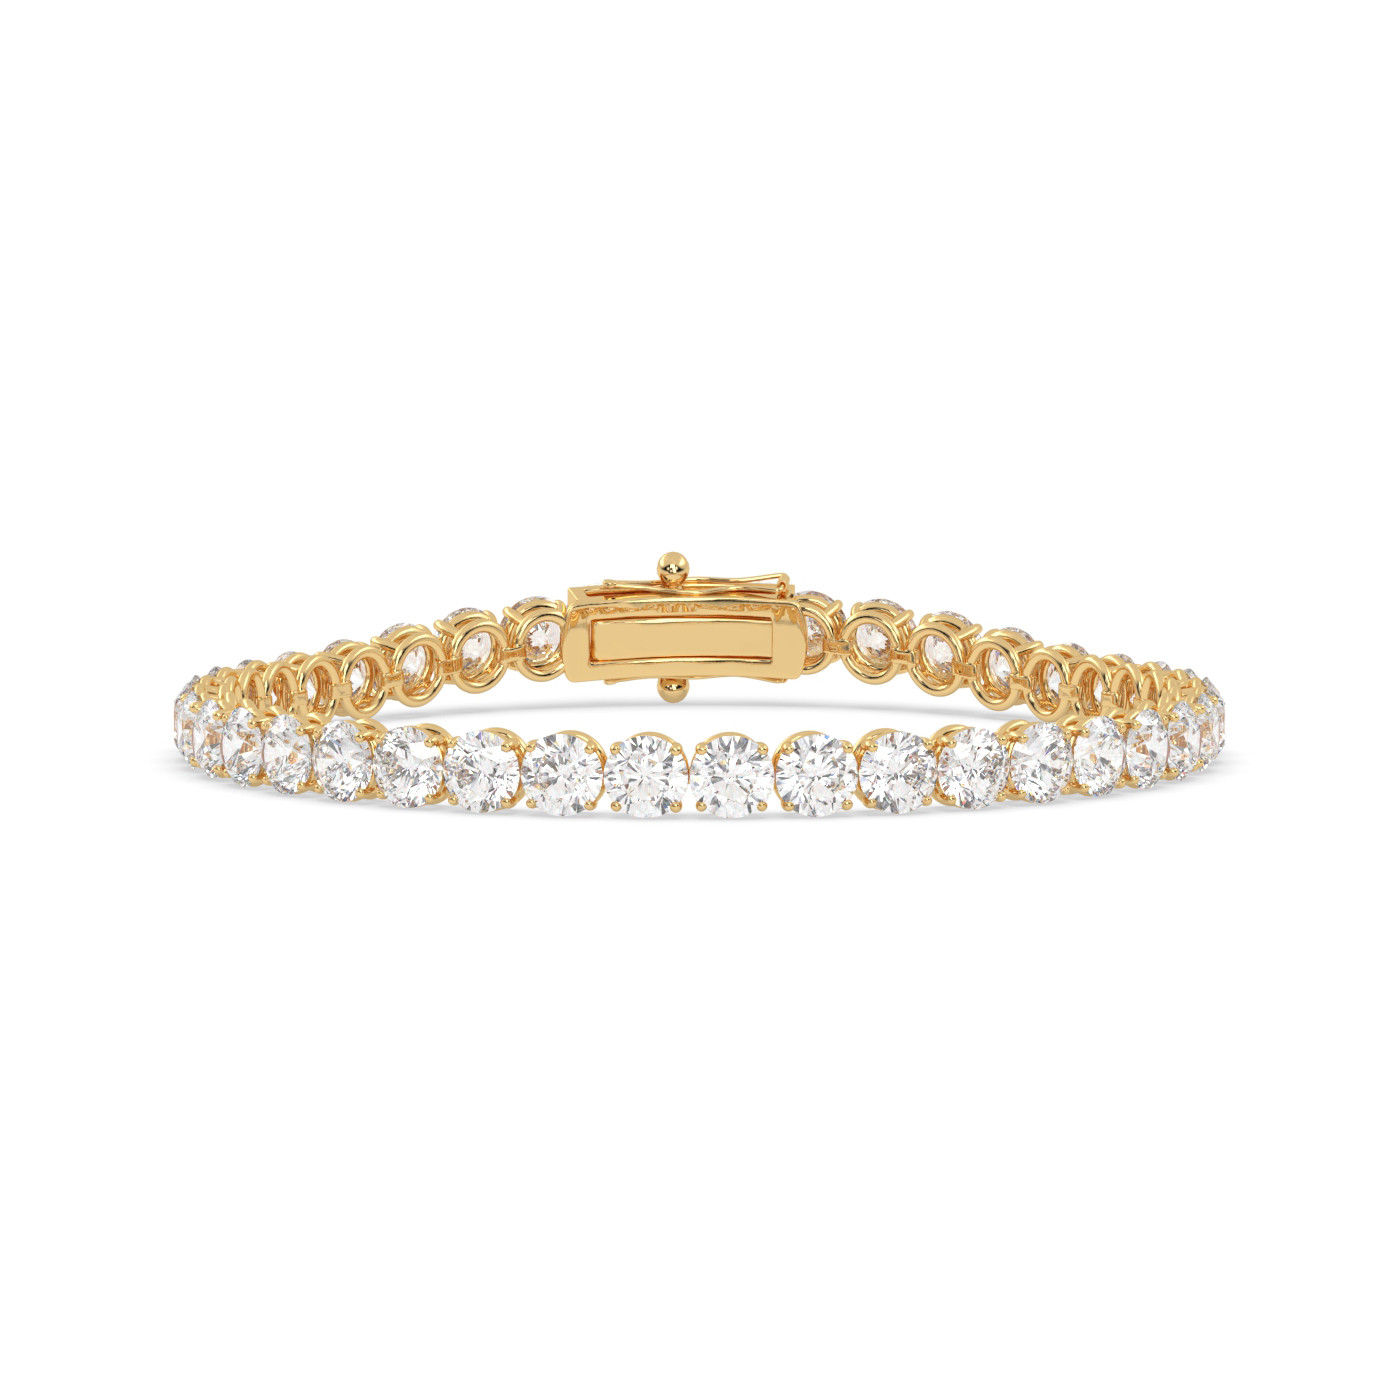 18k yellow gold 10 carat round diamond tennis bracelet with traditional lock sytem Photos & images